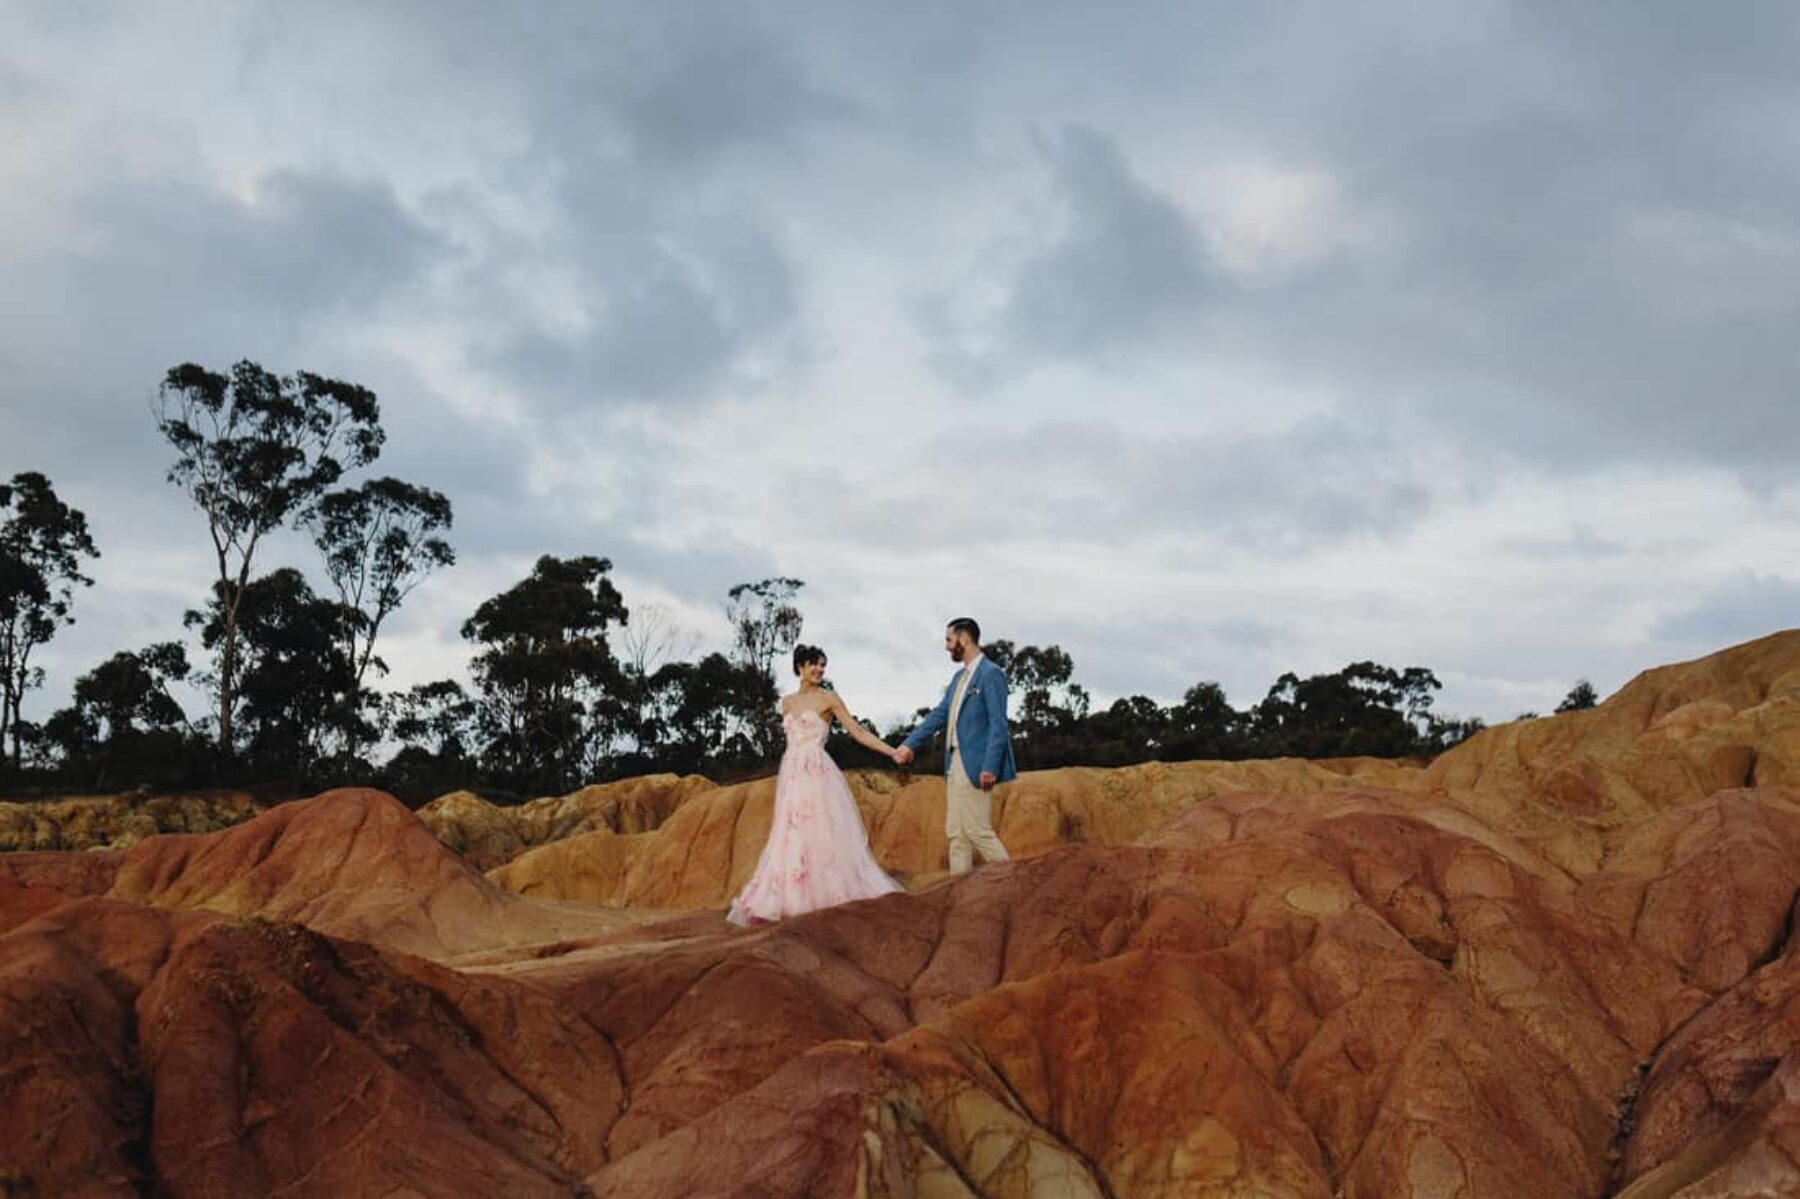 retro Australiana wedding inspiration at Heathcote’s Pink Cliffs